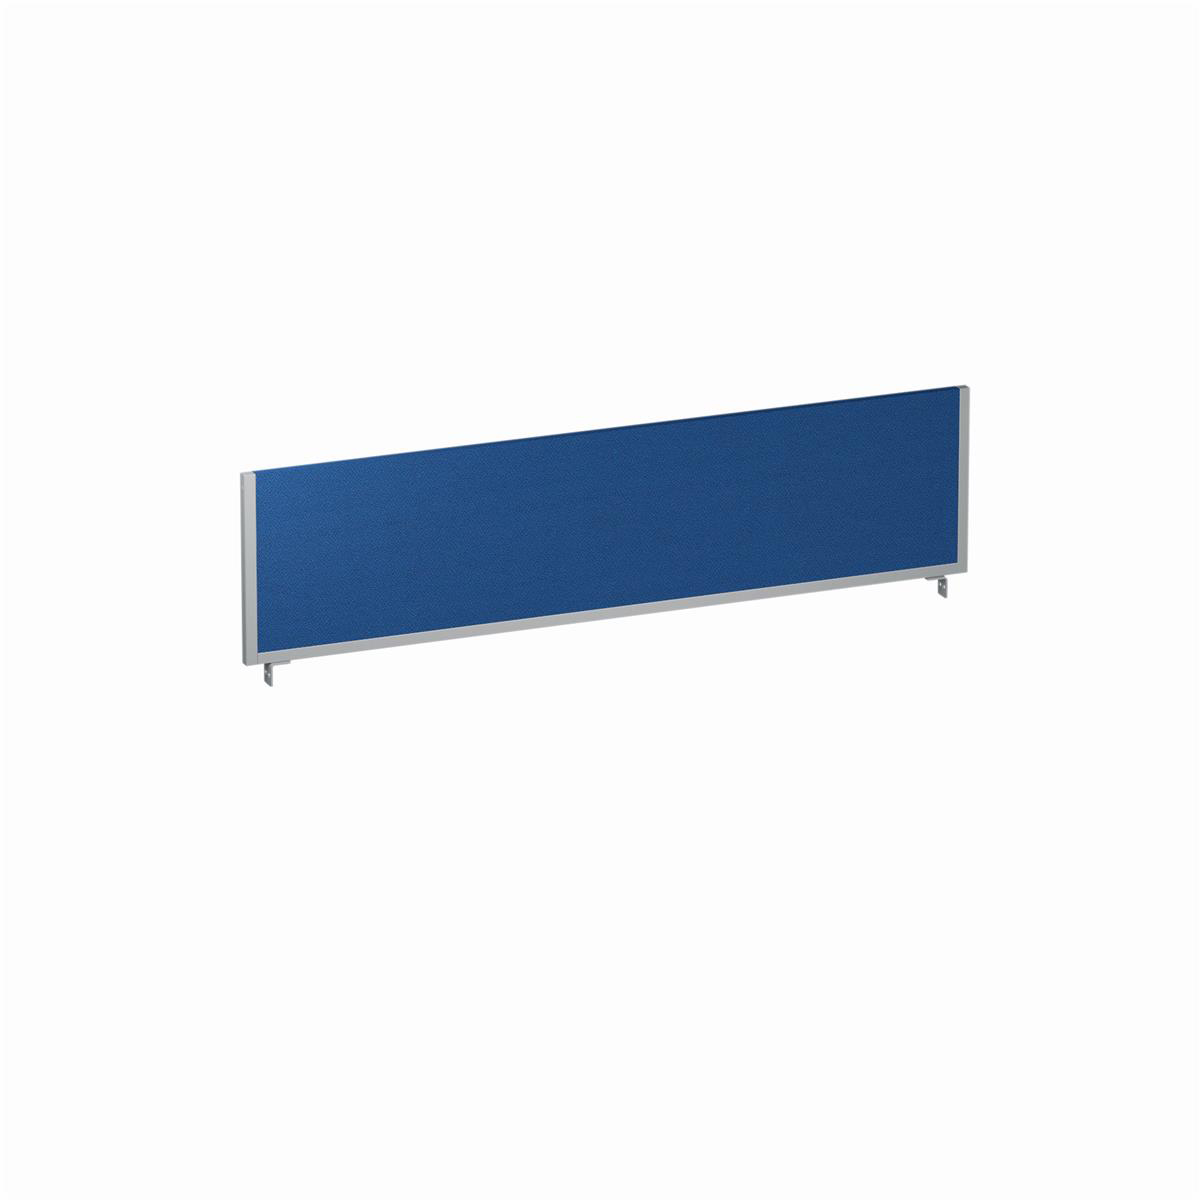 Trexus+1600x400+Rectangular+Bench+Desk+Screen+Blue%2FSilver+1600x400mm+Ref+LEB055